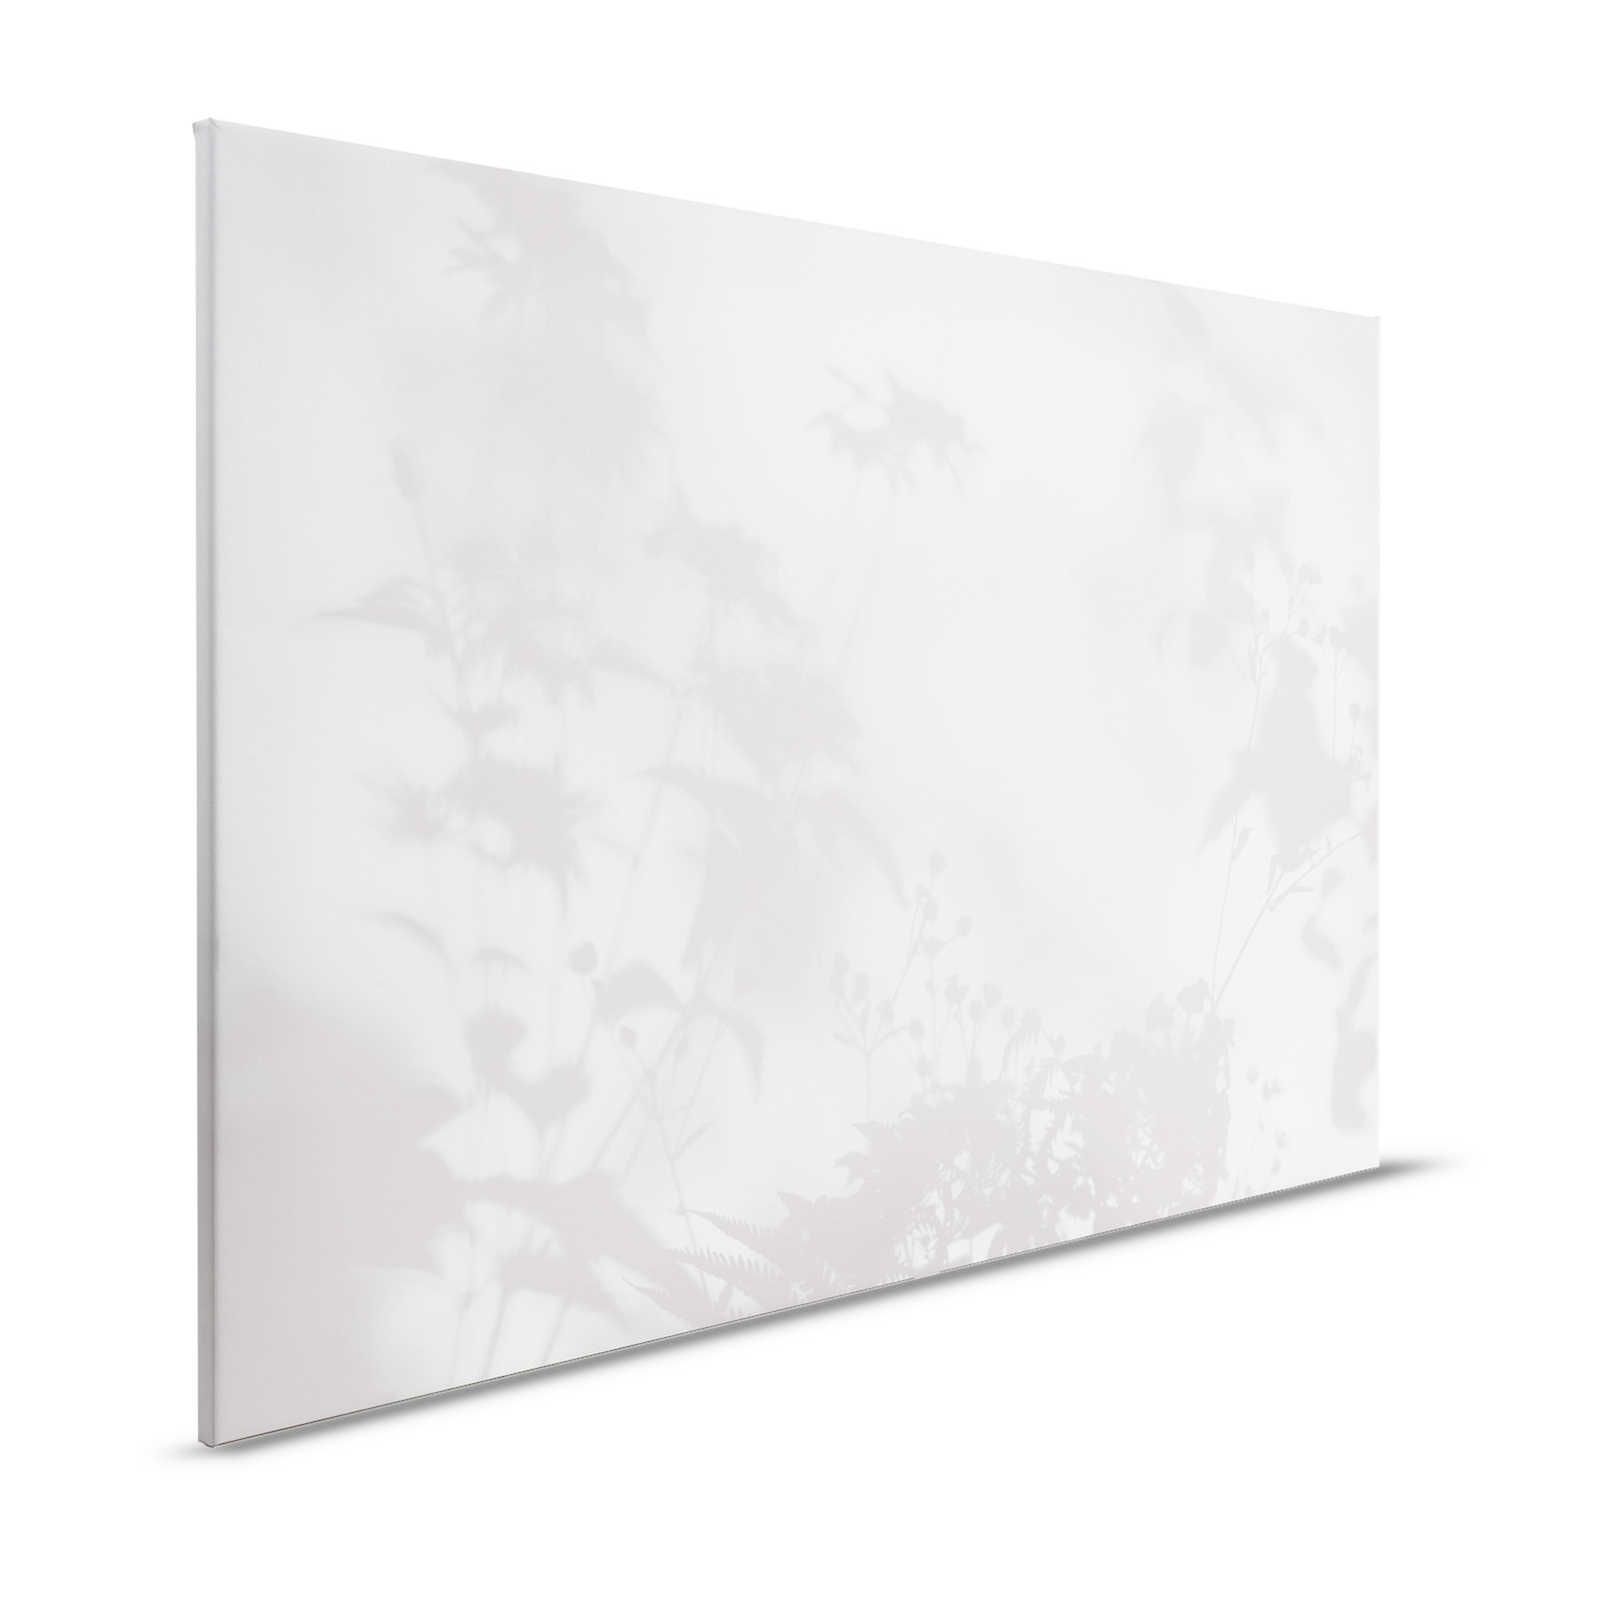 Shadow Room 2 - Natur Leinwandbild Grau & Weiß, verblasstes Design – 1,20 m x 0,80 m
